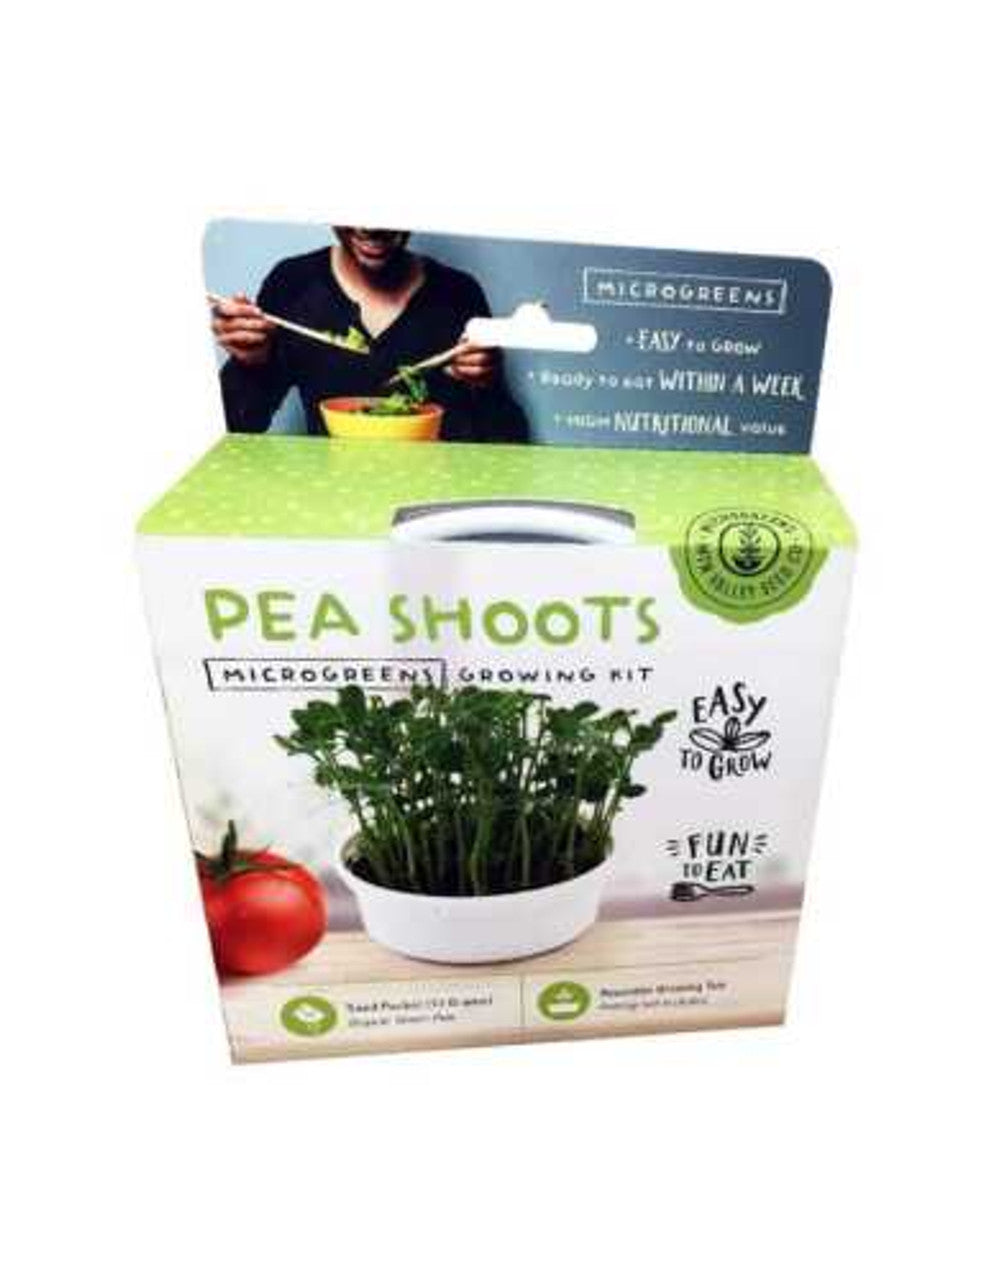 Pea Shoots Microgreens Growing Kit